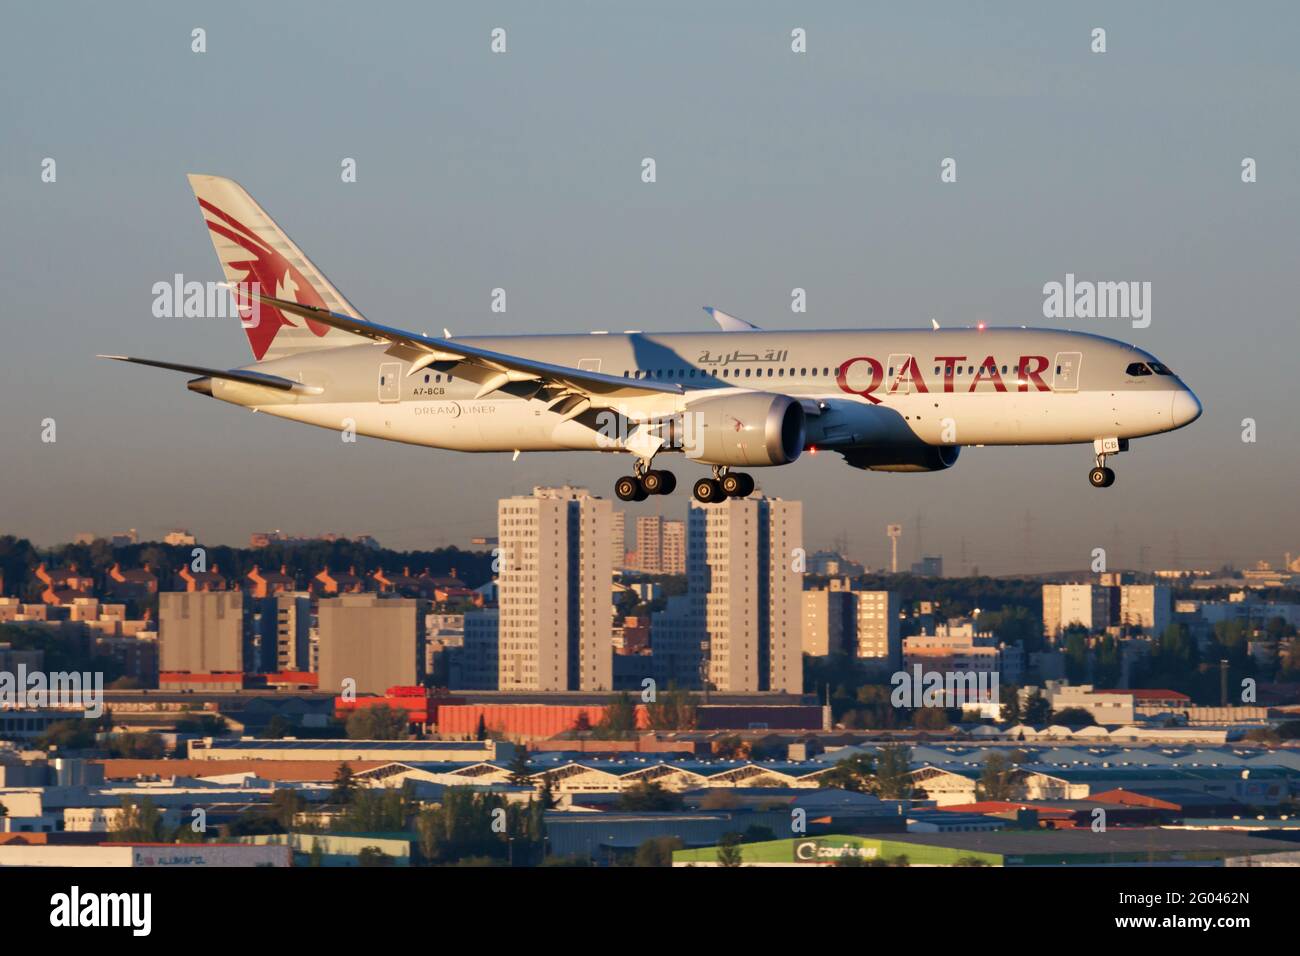 Madrid, Spain - May 4, 2016: Qatar Airways passenger plane at airport. Schedule flight travel. Aviation and aircraft. Air transport. Global internatio Stock Photo